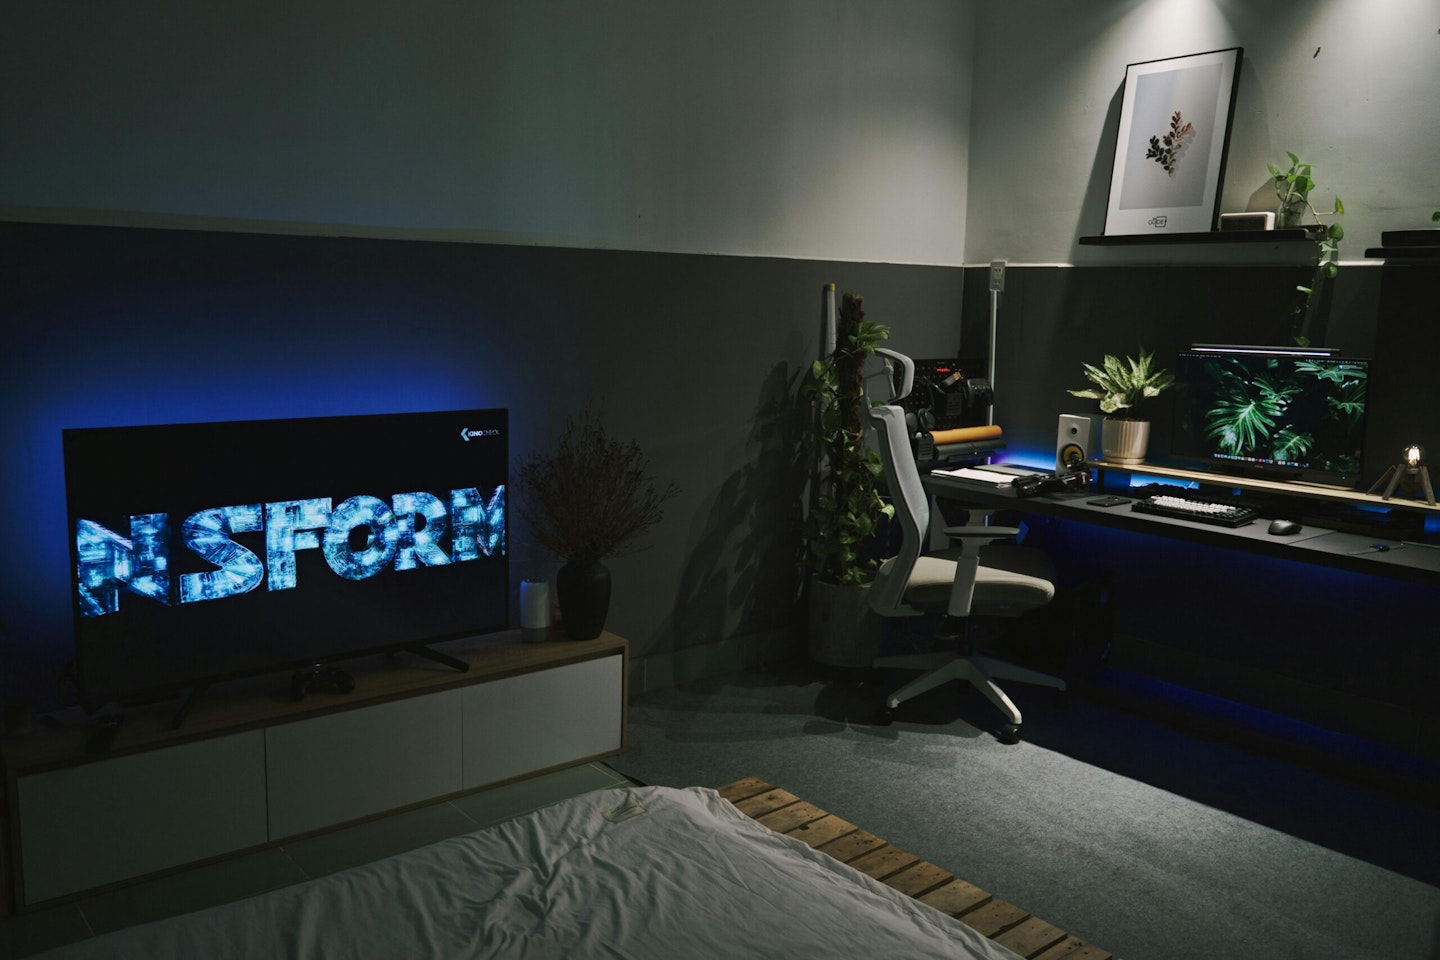 TV in a dark room